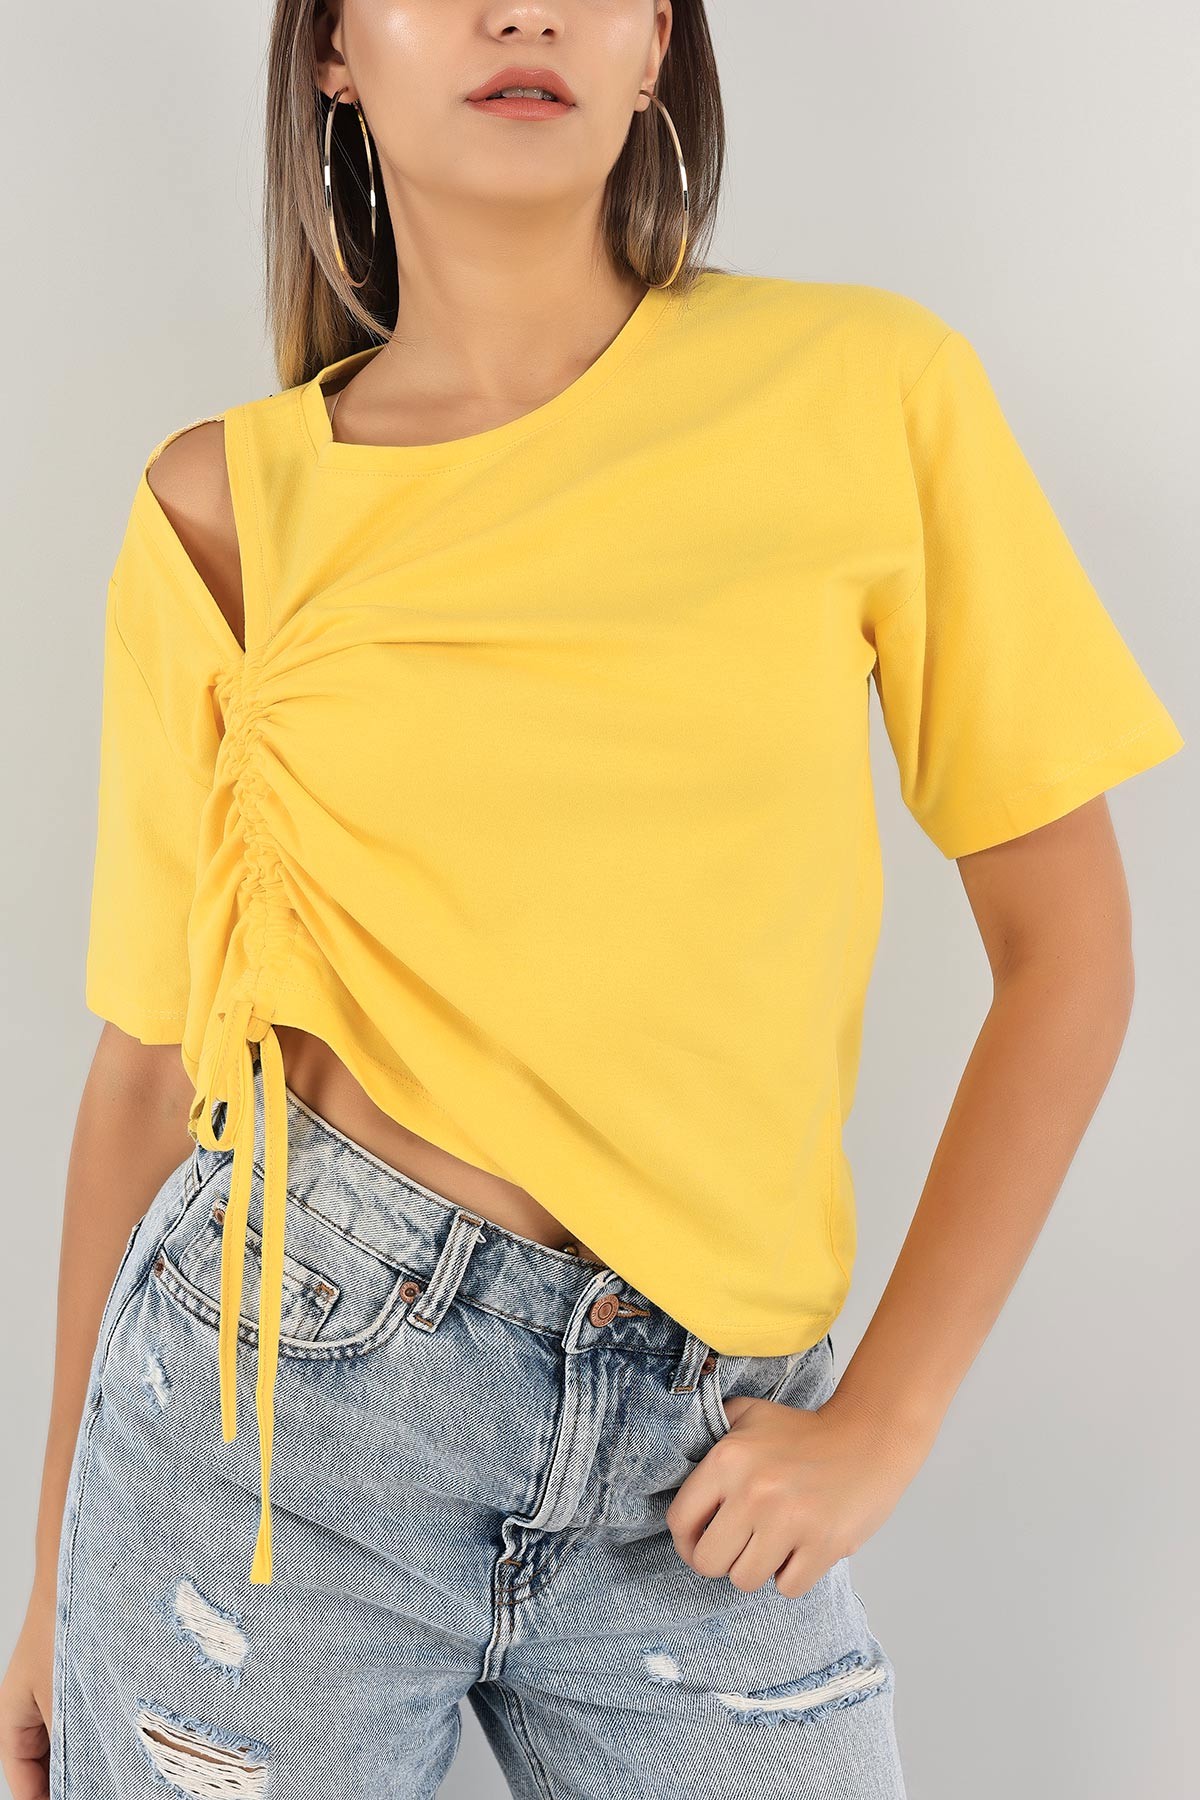 Women's yellow blouse